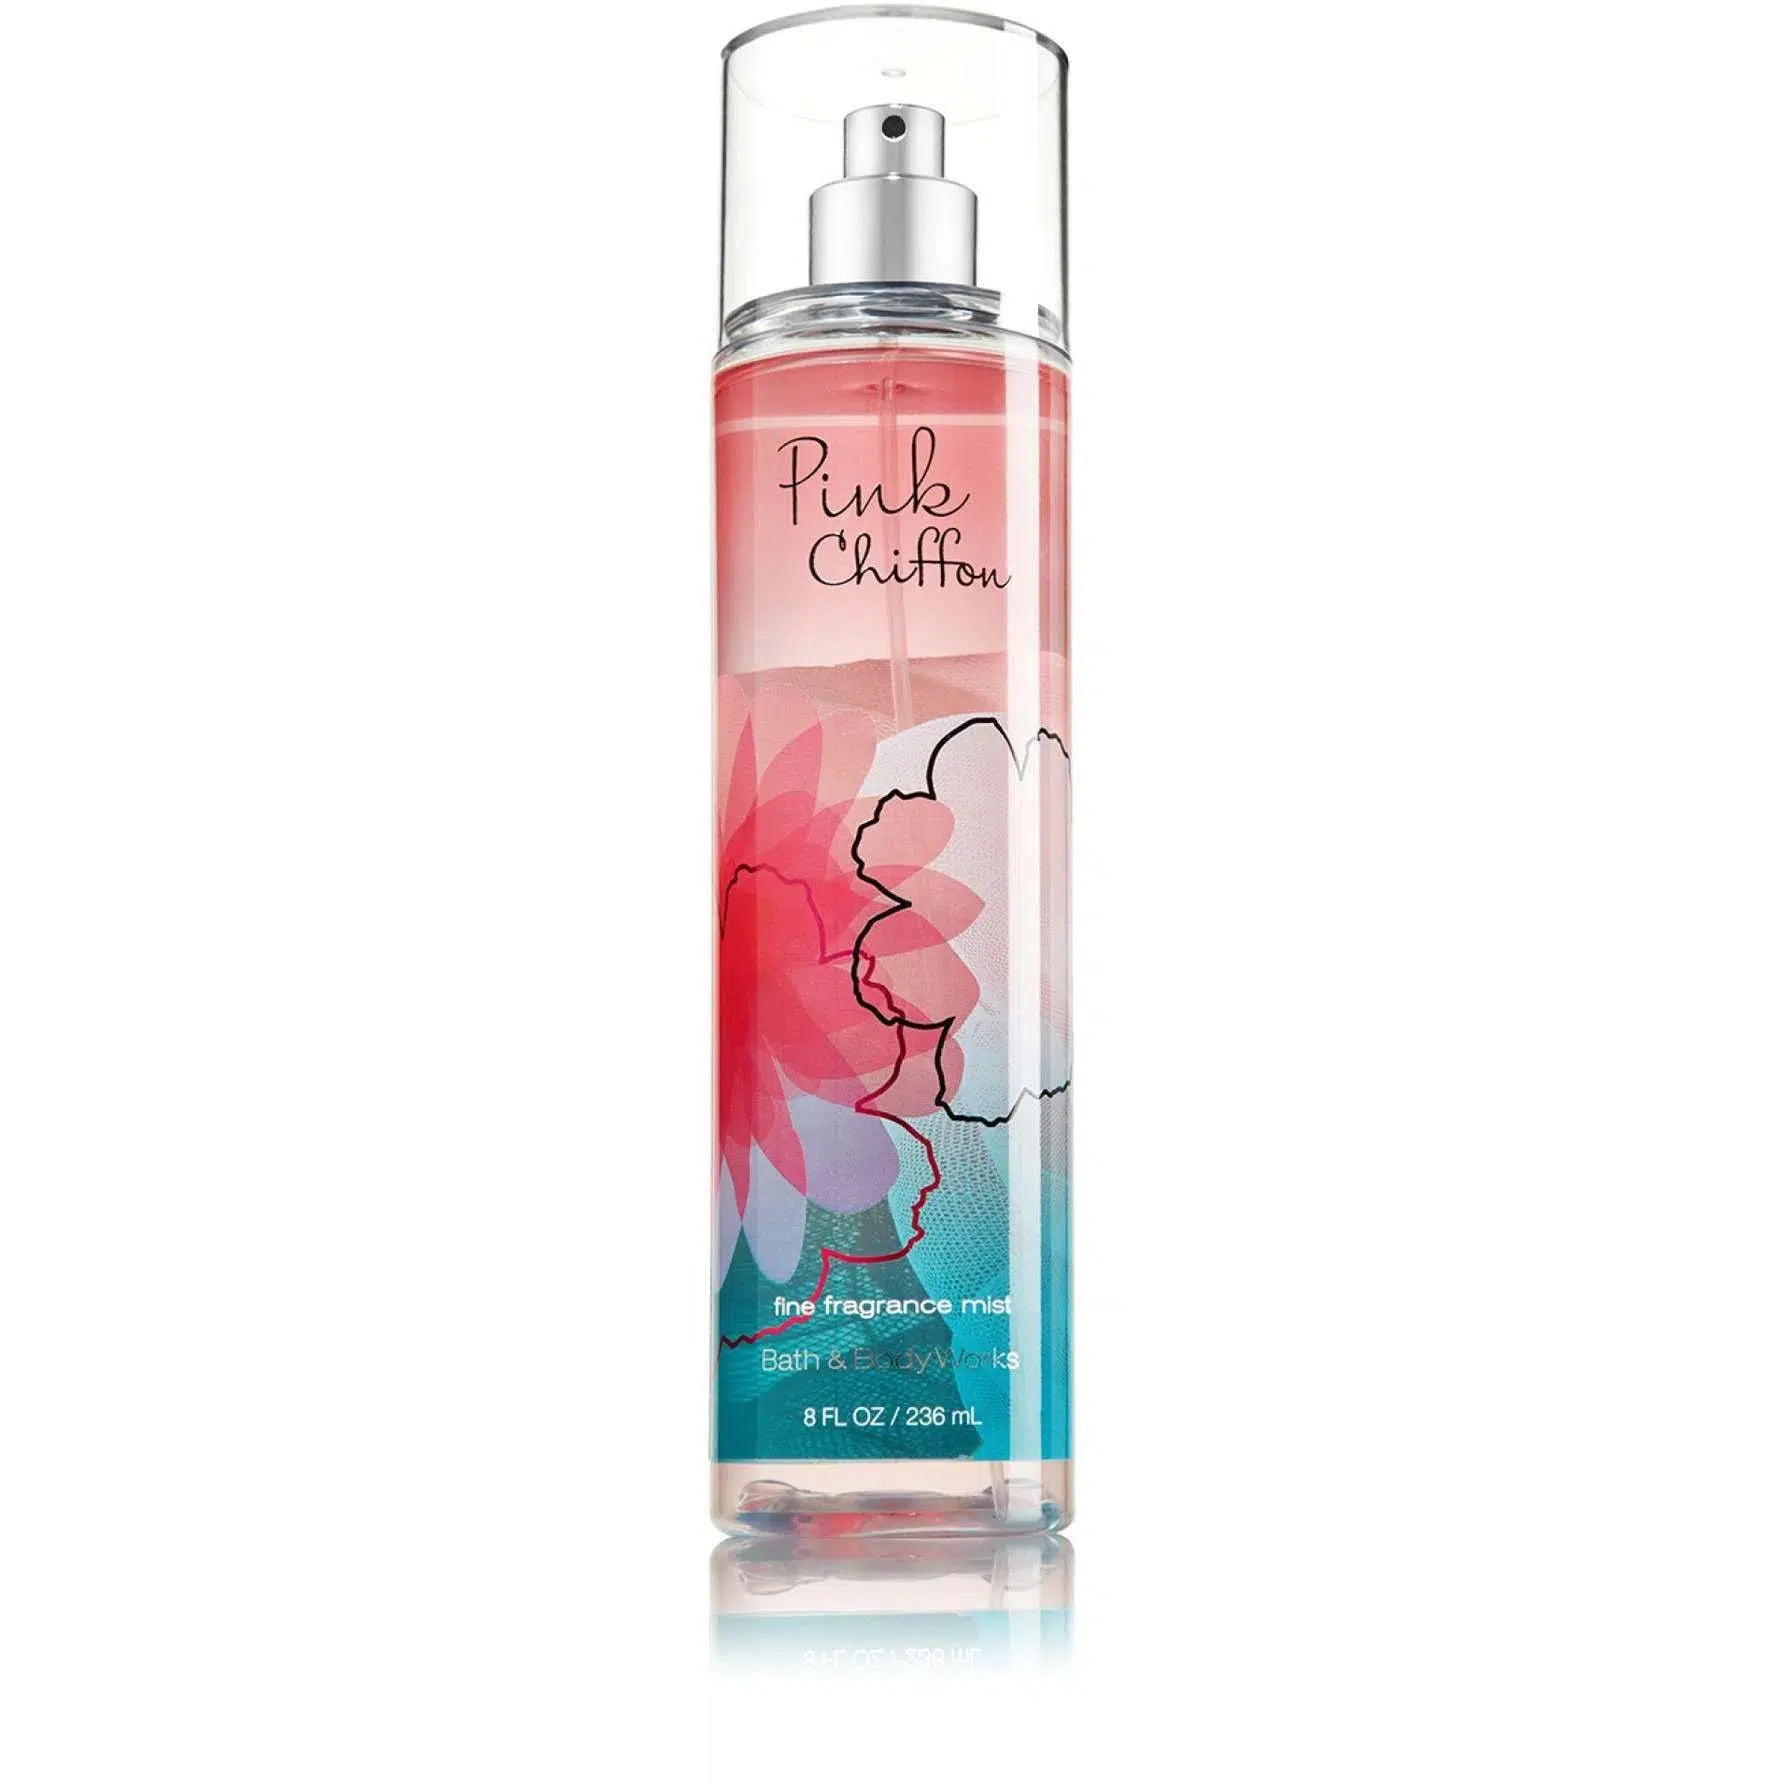 Bath & Body Works Pink Chiffon Fragrance Mist 236ml - Perfume Philippines